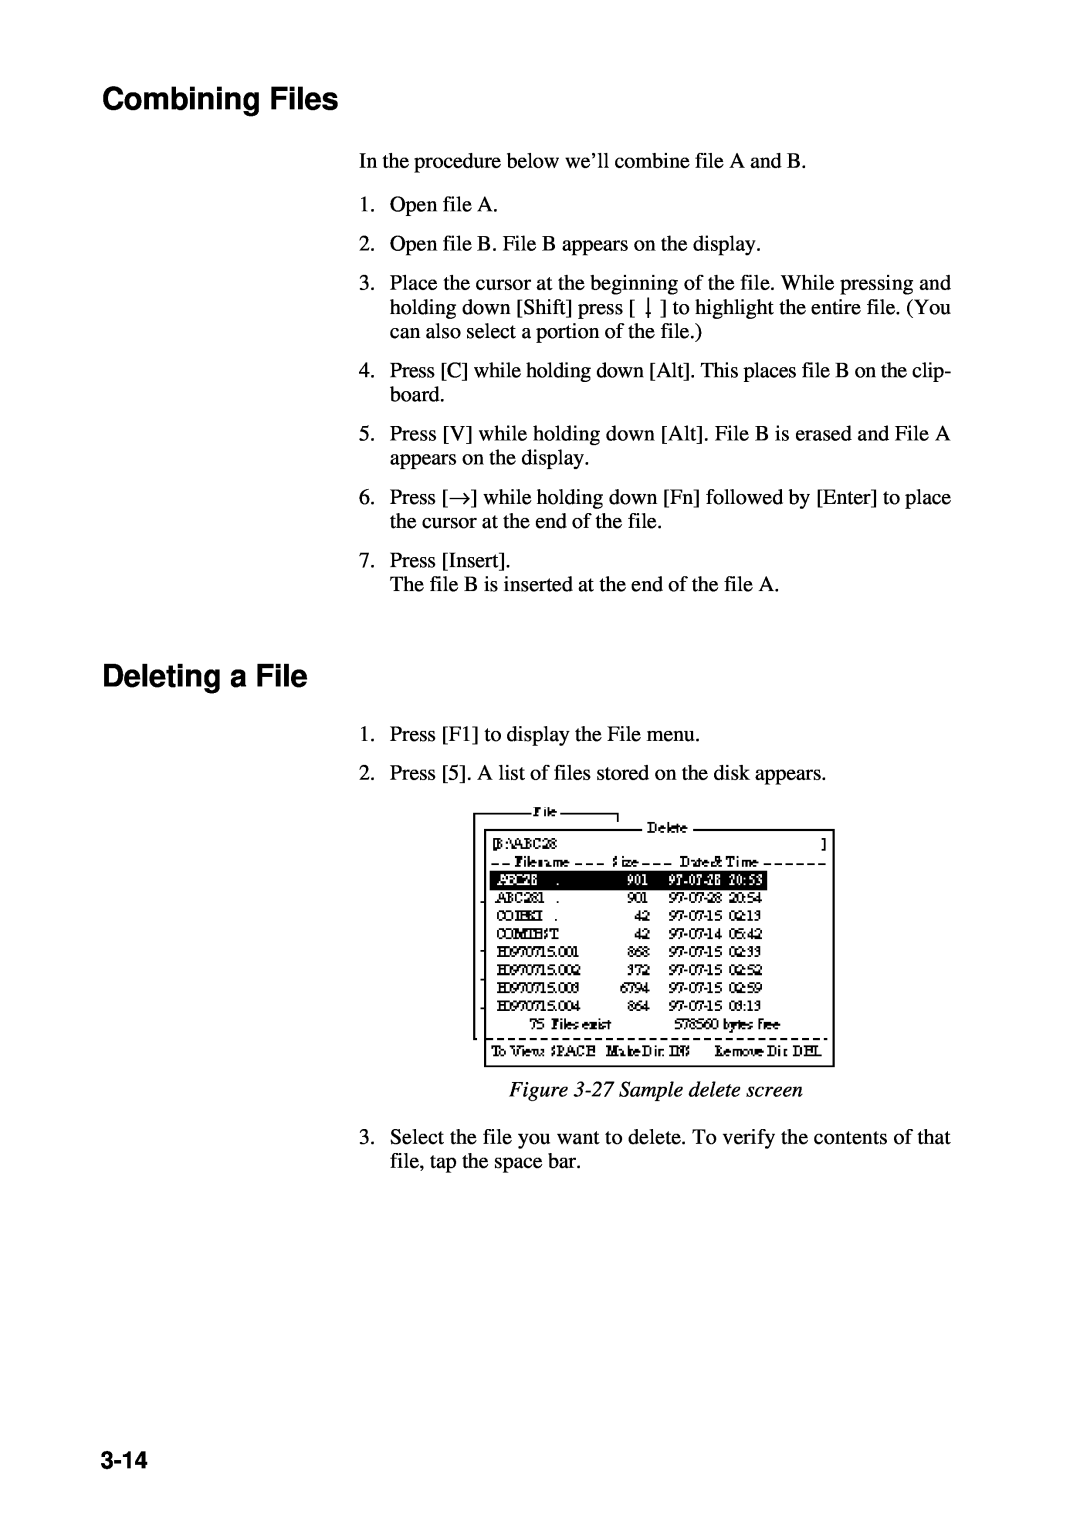 Furuno RC-1500-1T manual Combining Files, Deleting a File, 3-14, 27 Sample delete screen 